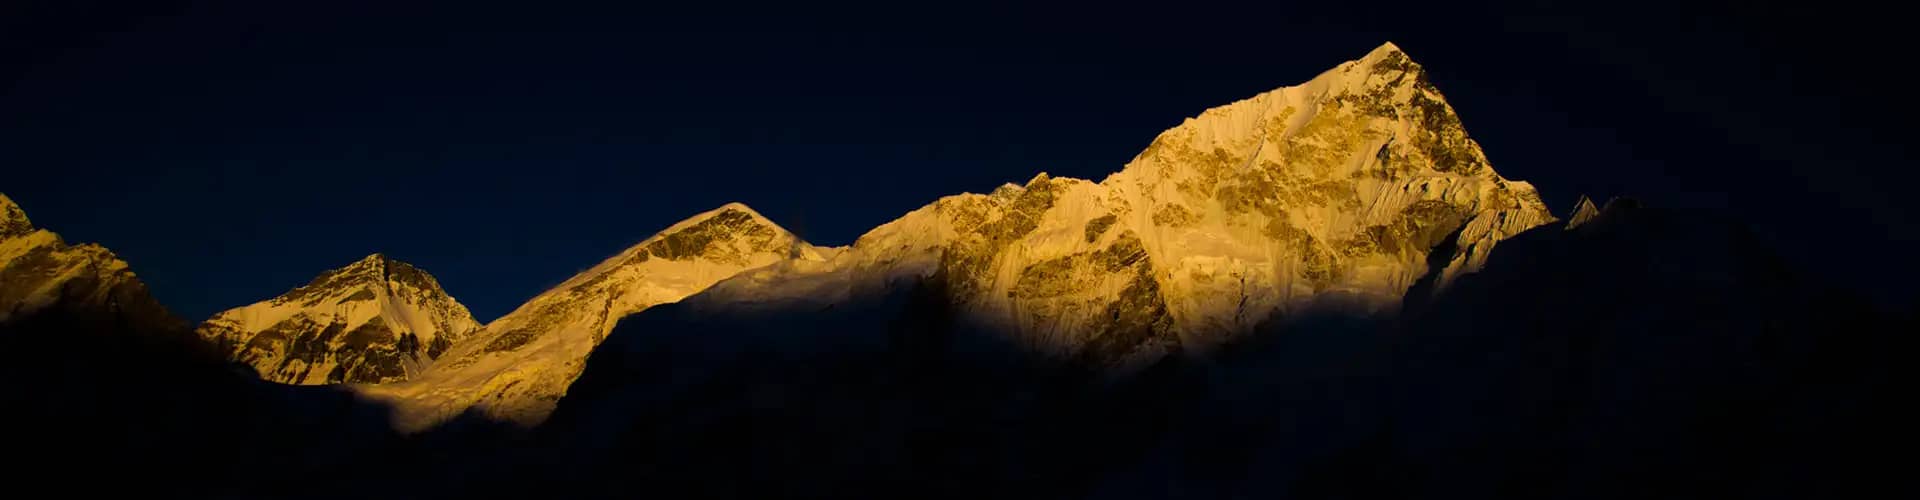 Mount Everest From Kala Patthar